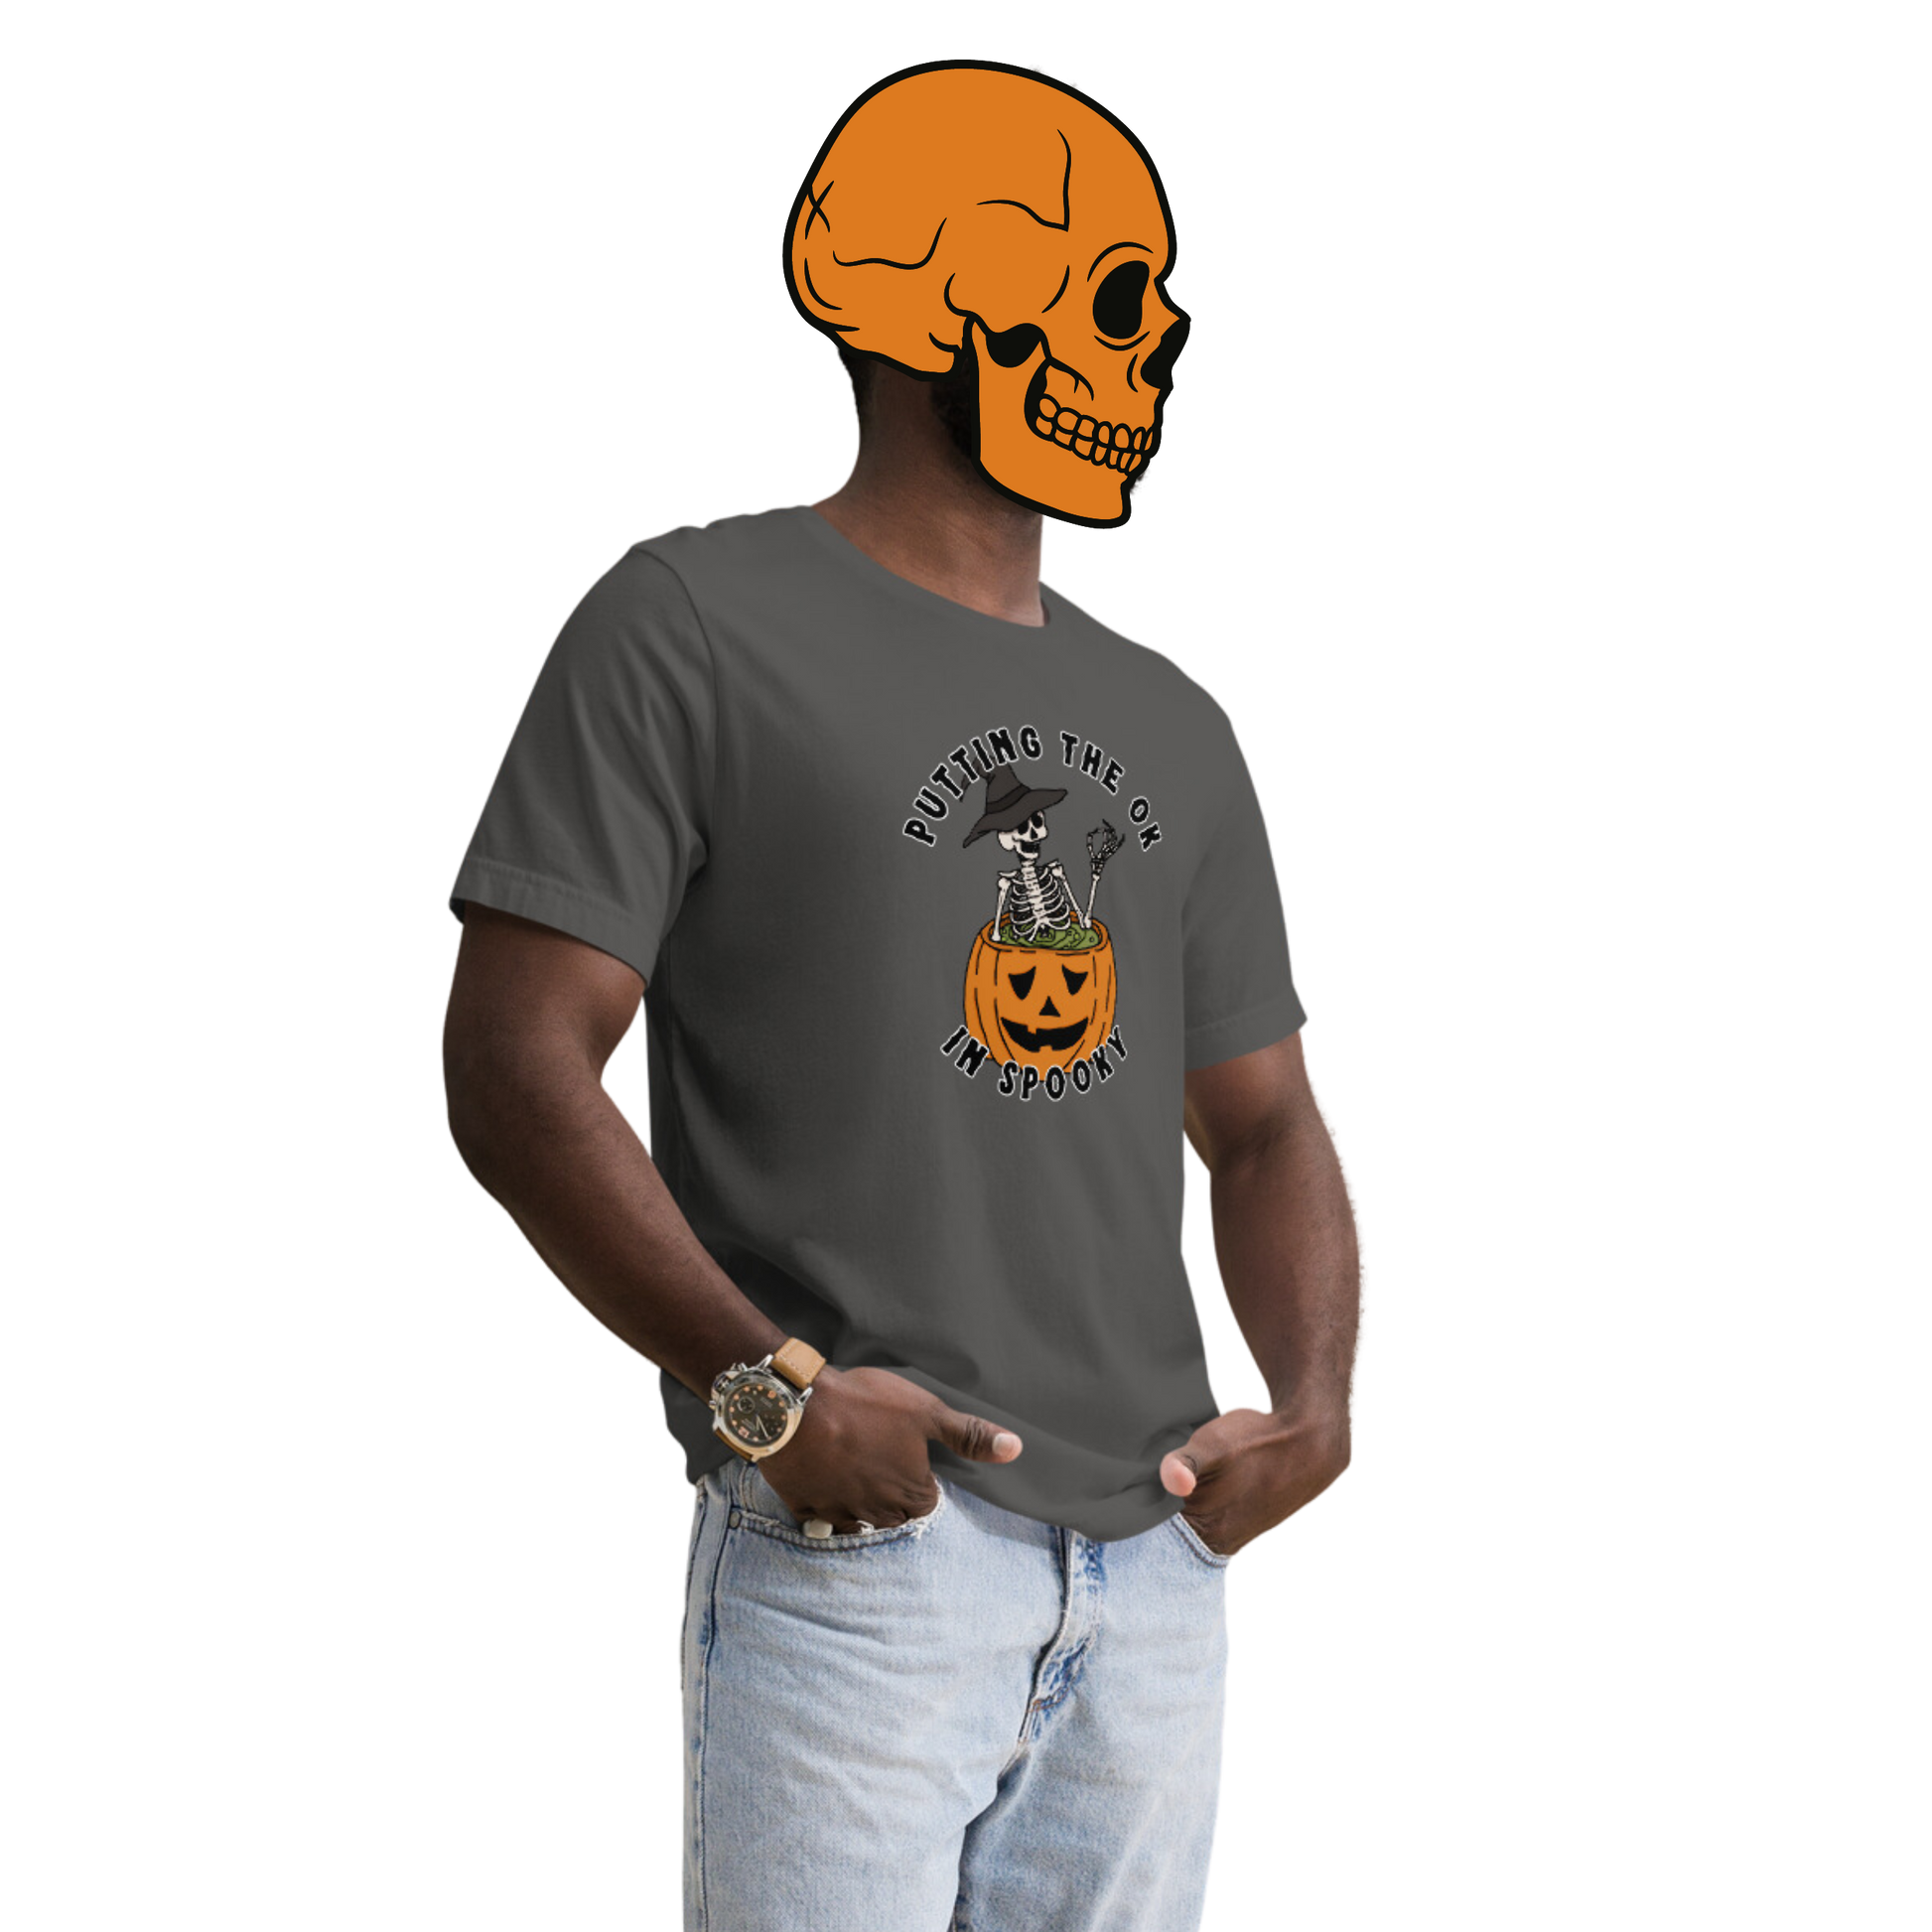 spo(ok)y t-shirt model in grey - gaslit apparel